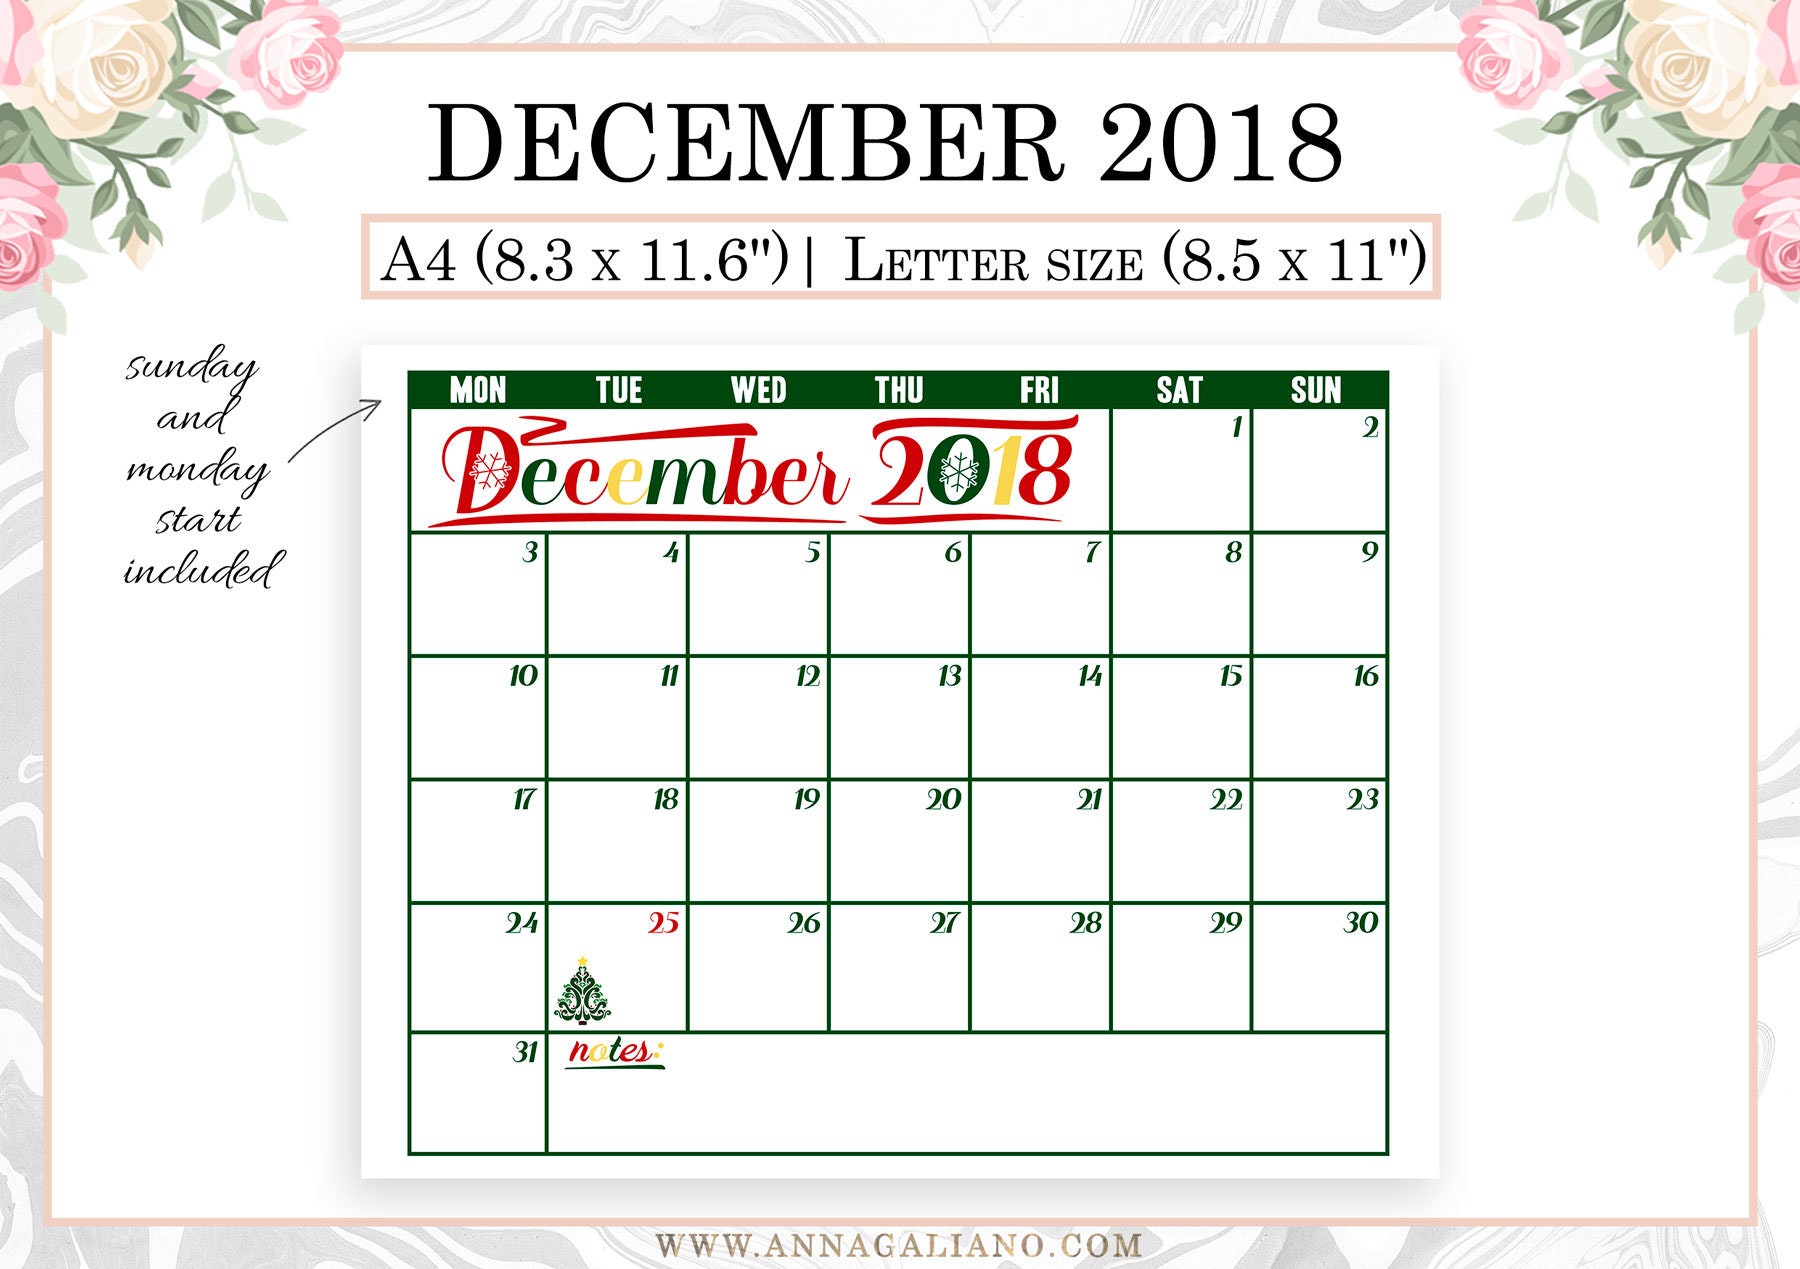 December 2018 Calendar Archives